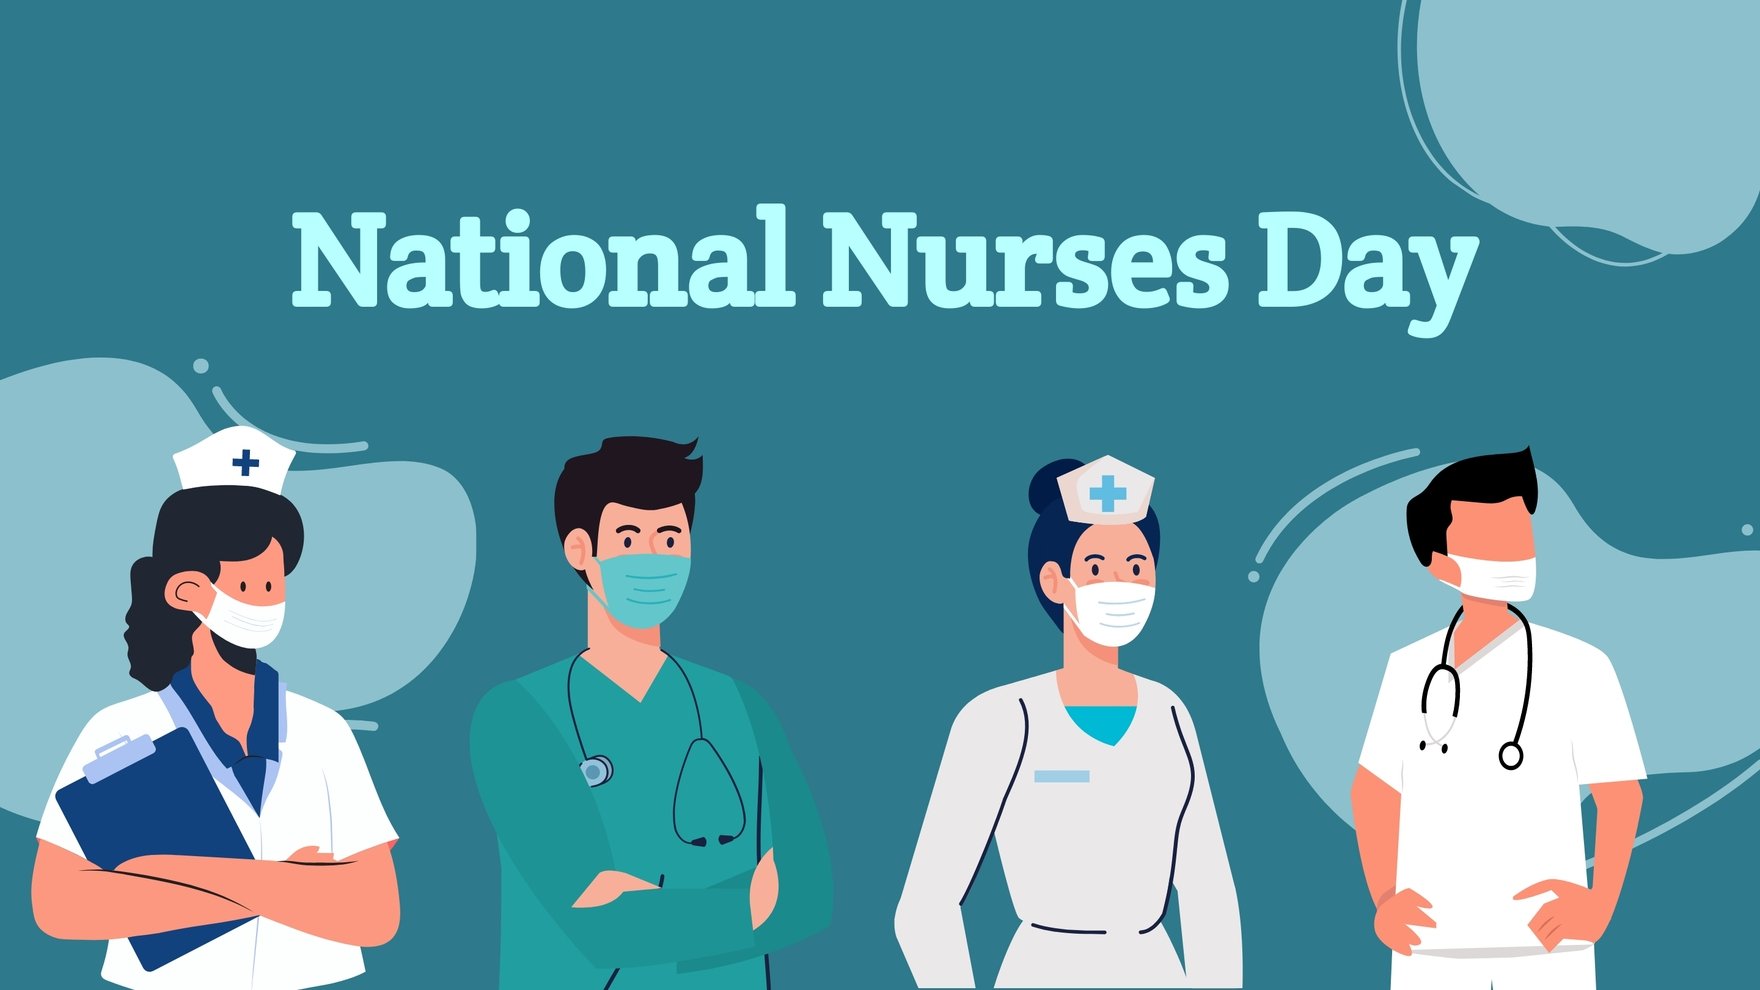 National Nurses Day Wallpaper Background in PDF, Illustrator, PSD, EPS, SVG, JPG, PNG